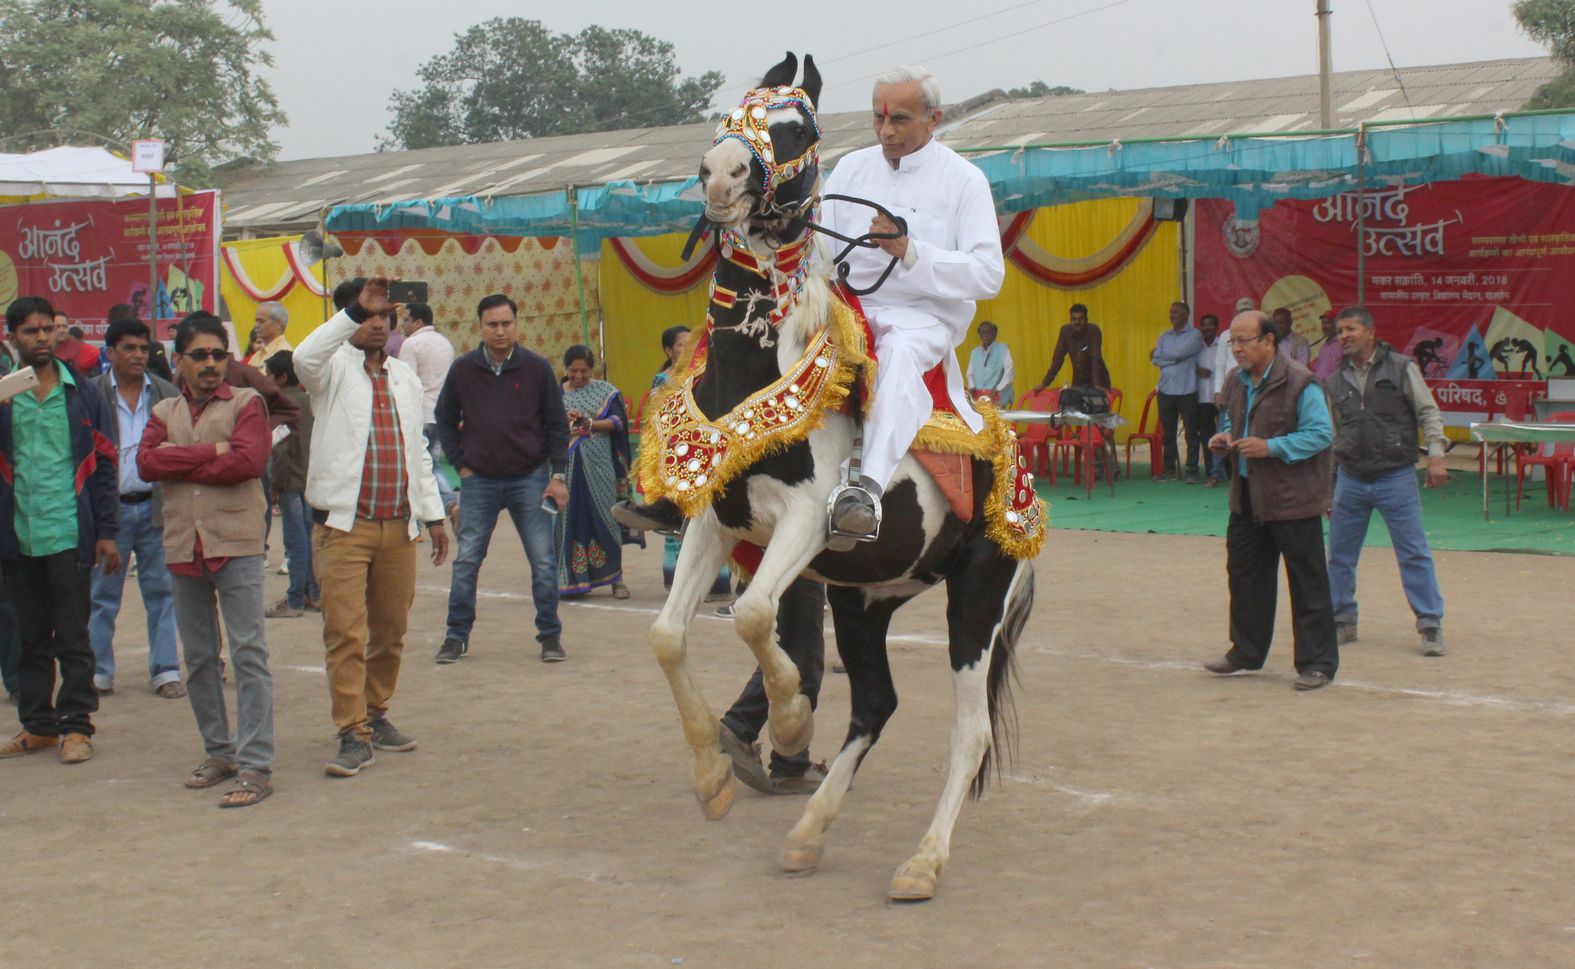 Balakrishna Patidar, the dance Horse